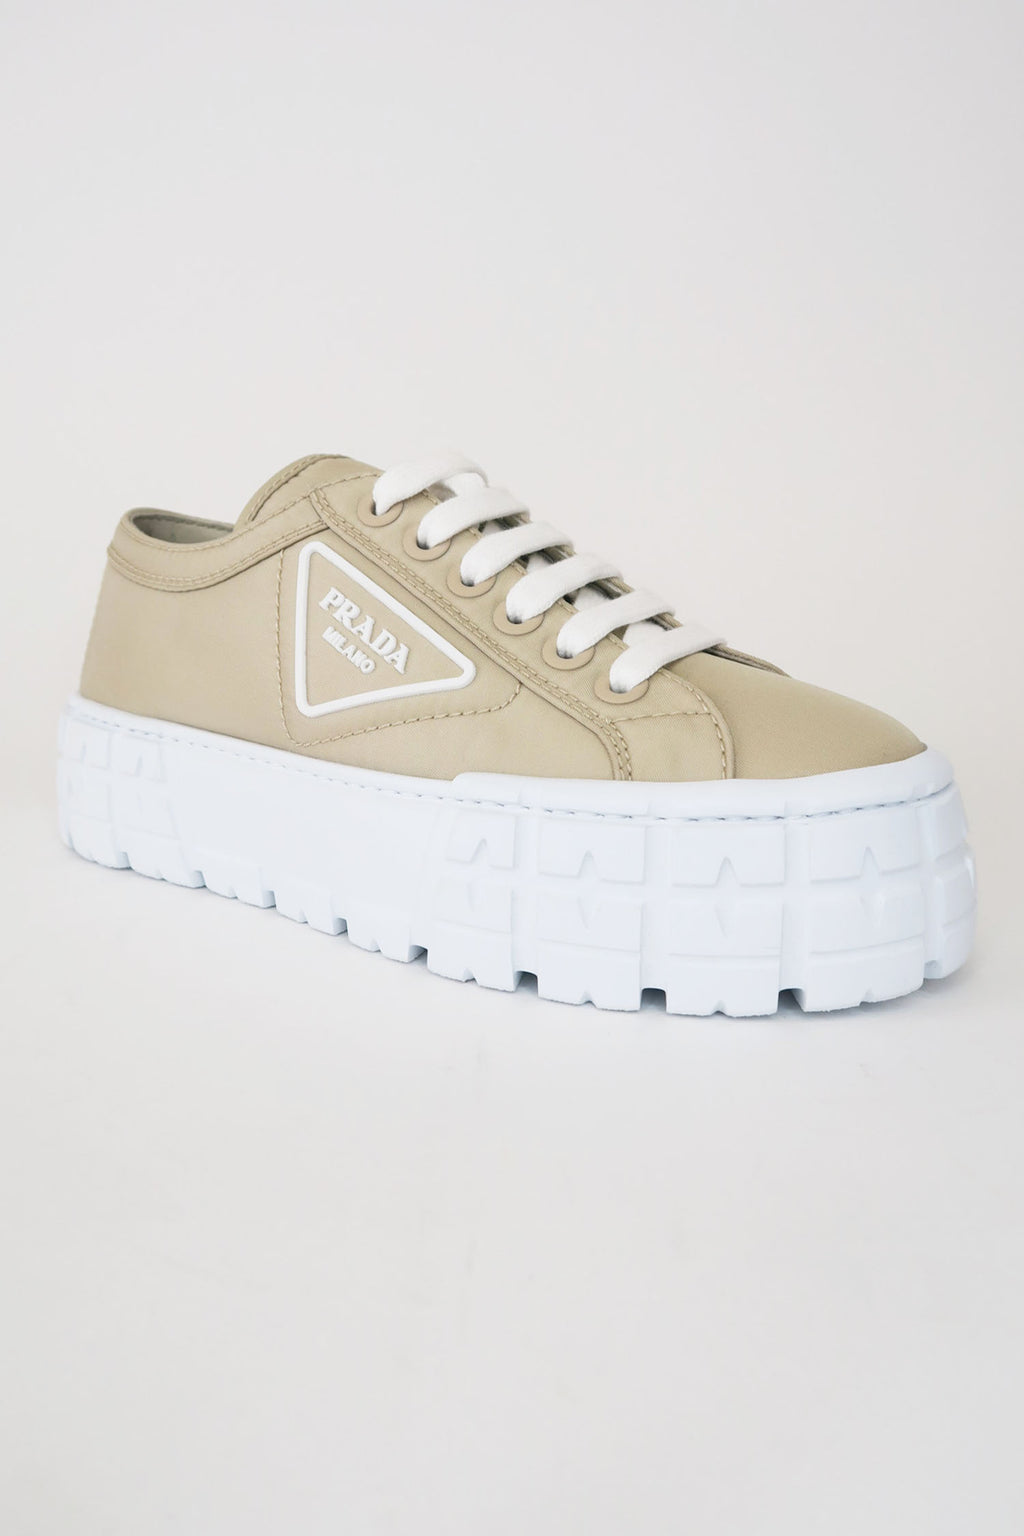 Prada Re-Nylon Platform Sneaker sz 37